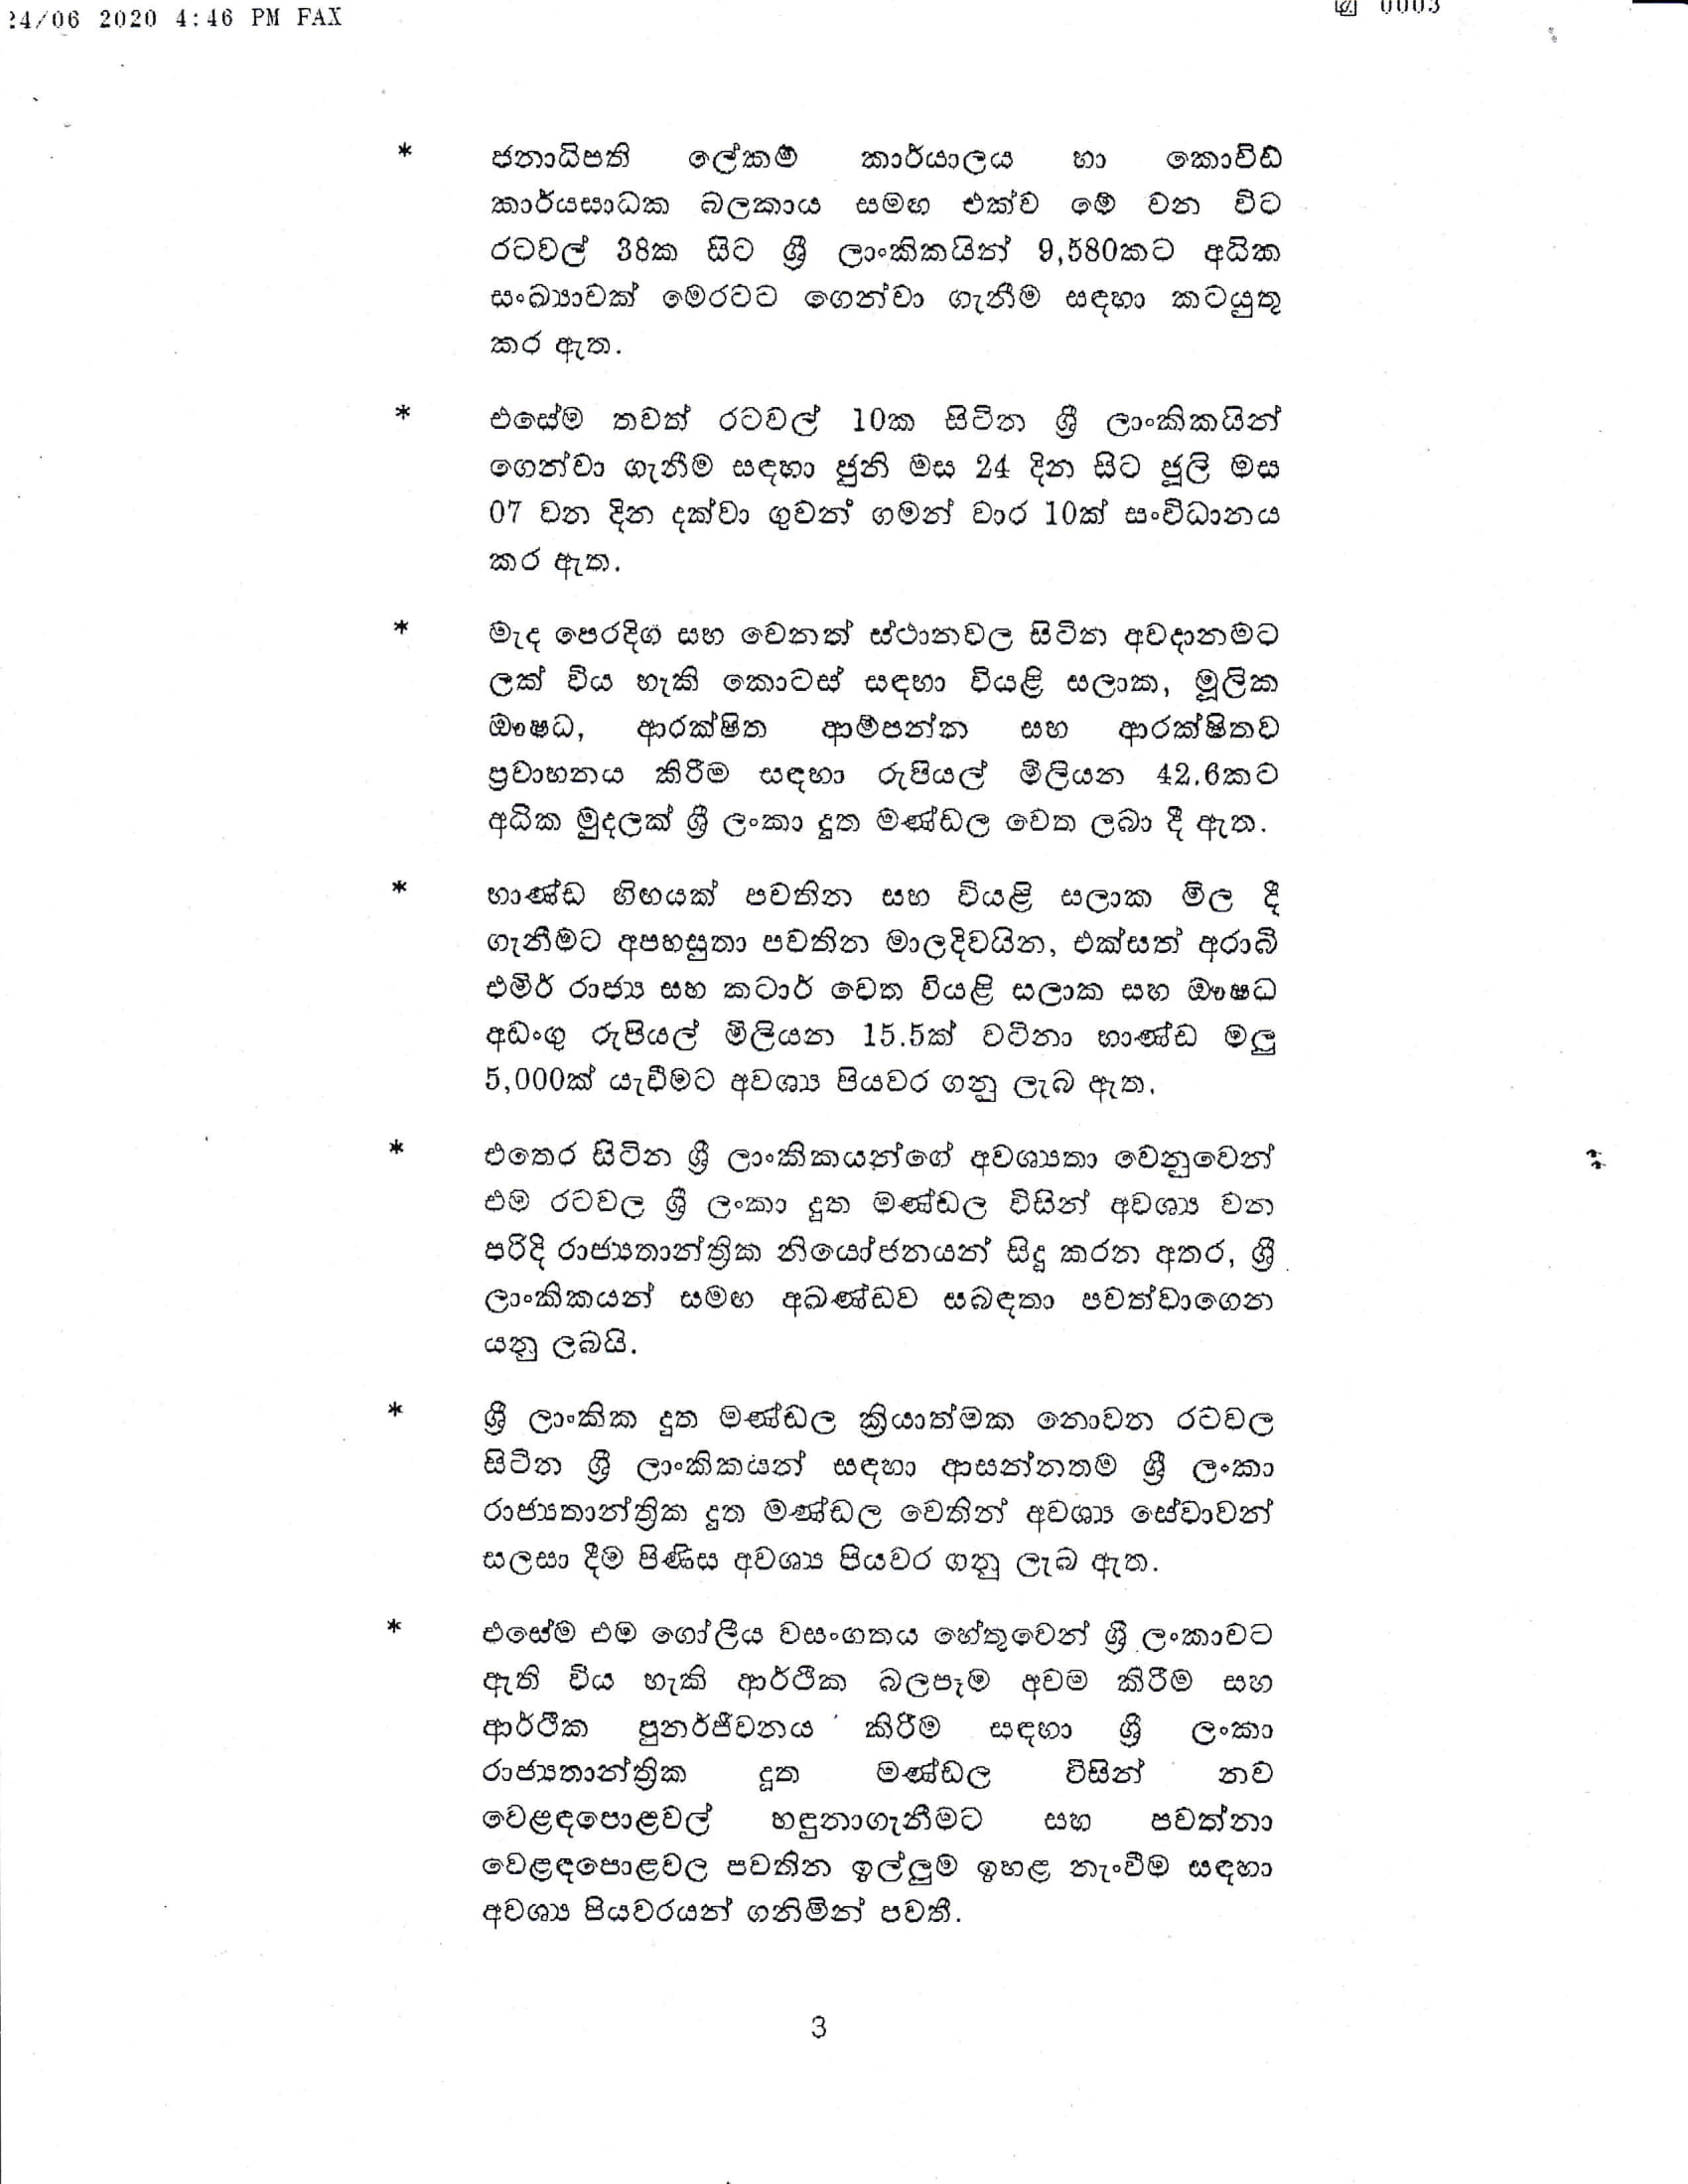 Cabinet Decision 2020 06 24 Sinhala New 3